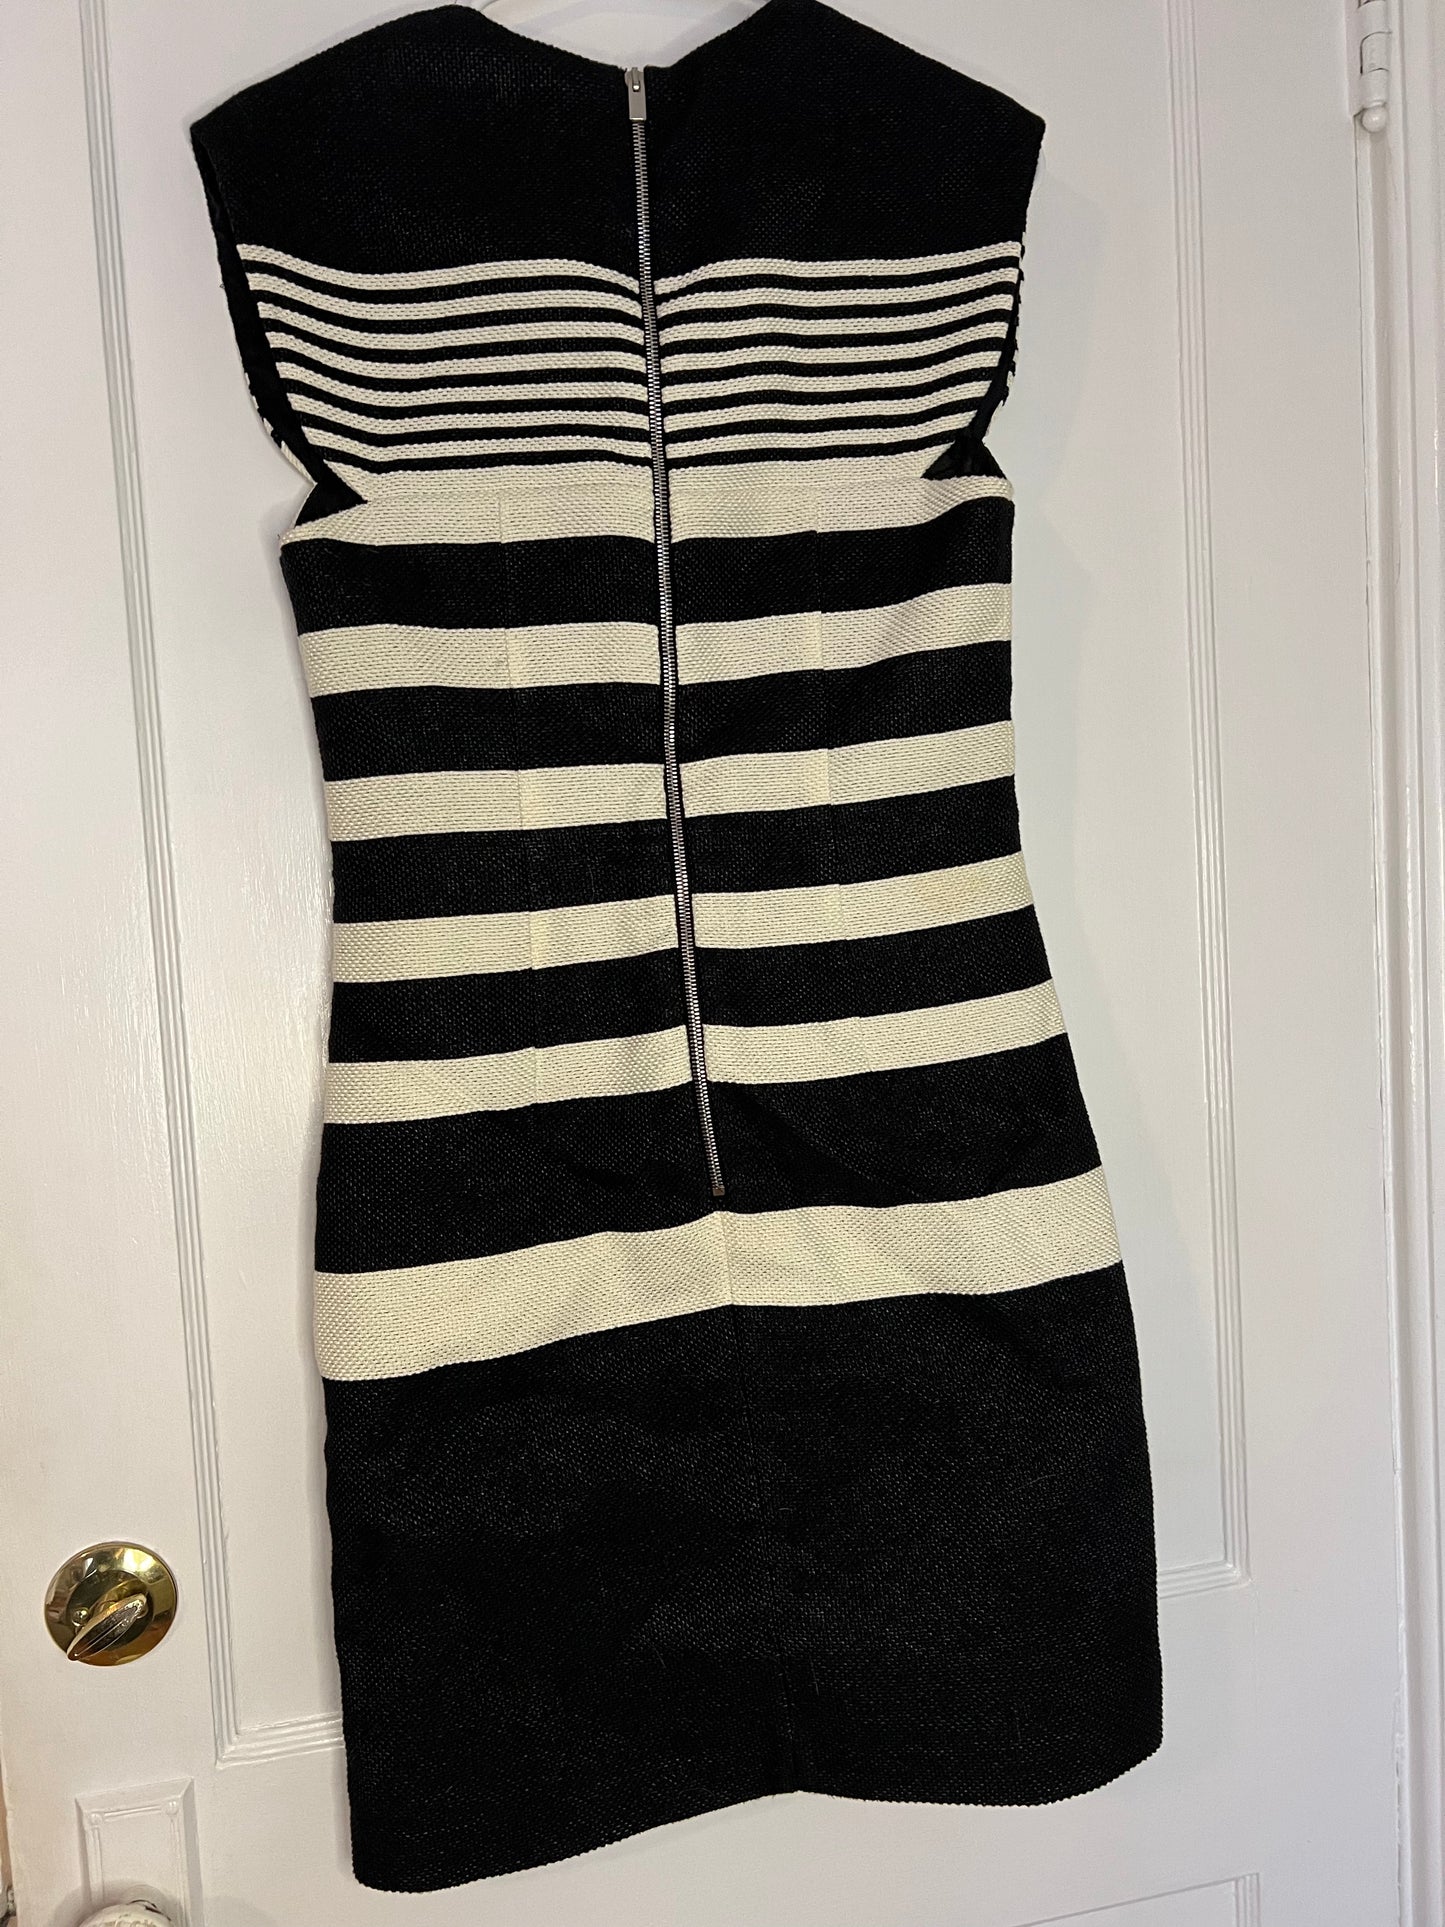 Derek Lam Black and White Striped Sleeveless Dress Size 4 EUC PPU 45208 or Spring Sale